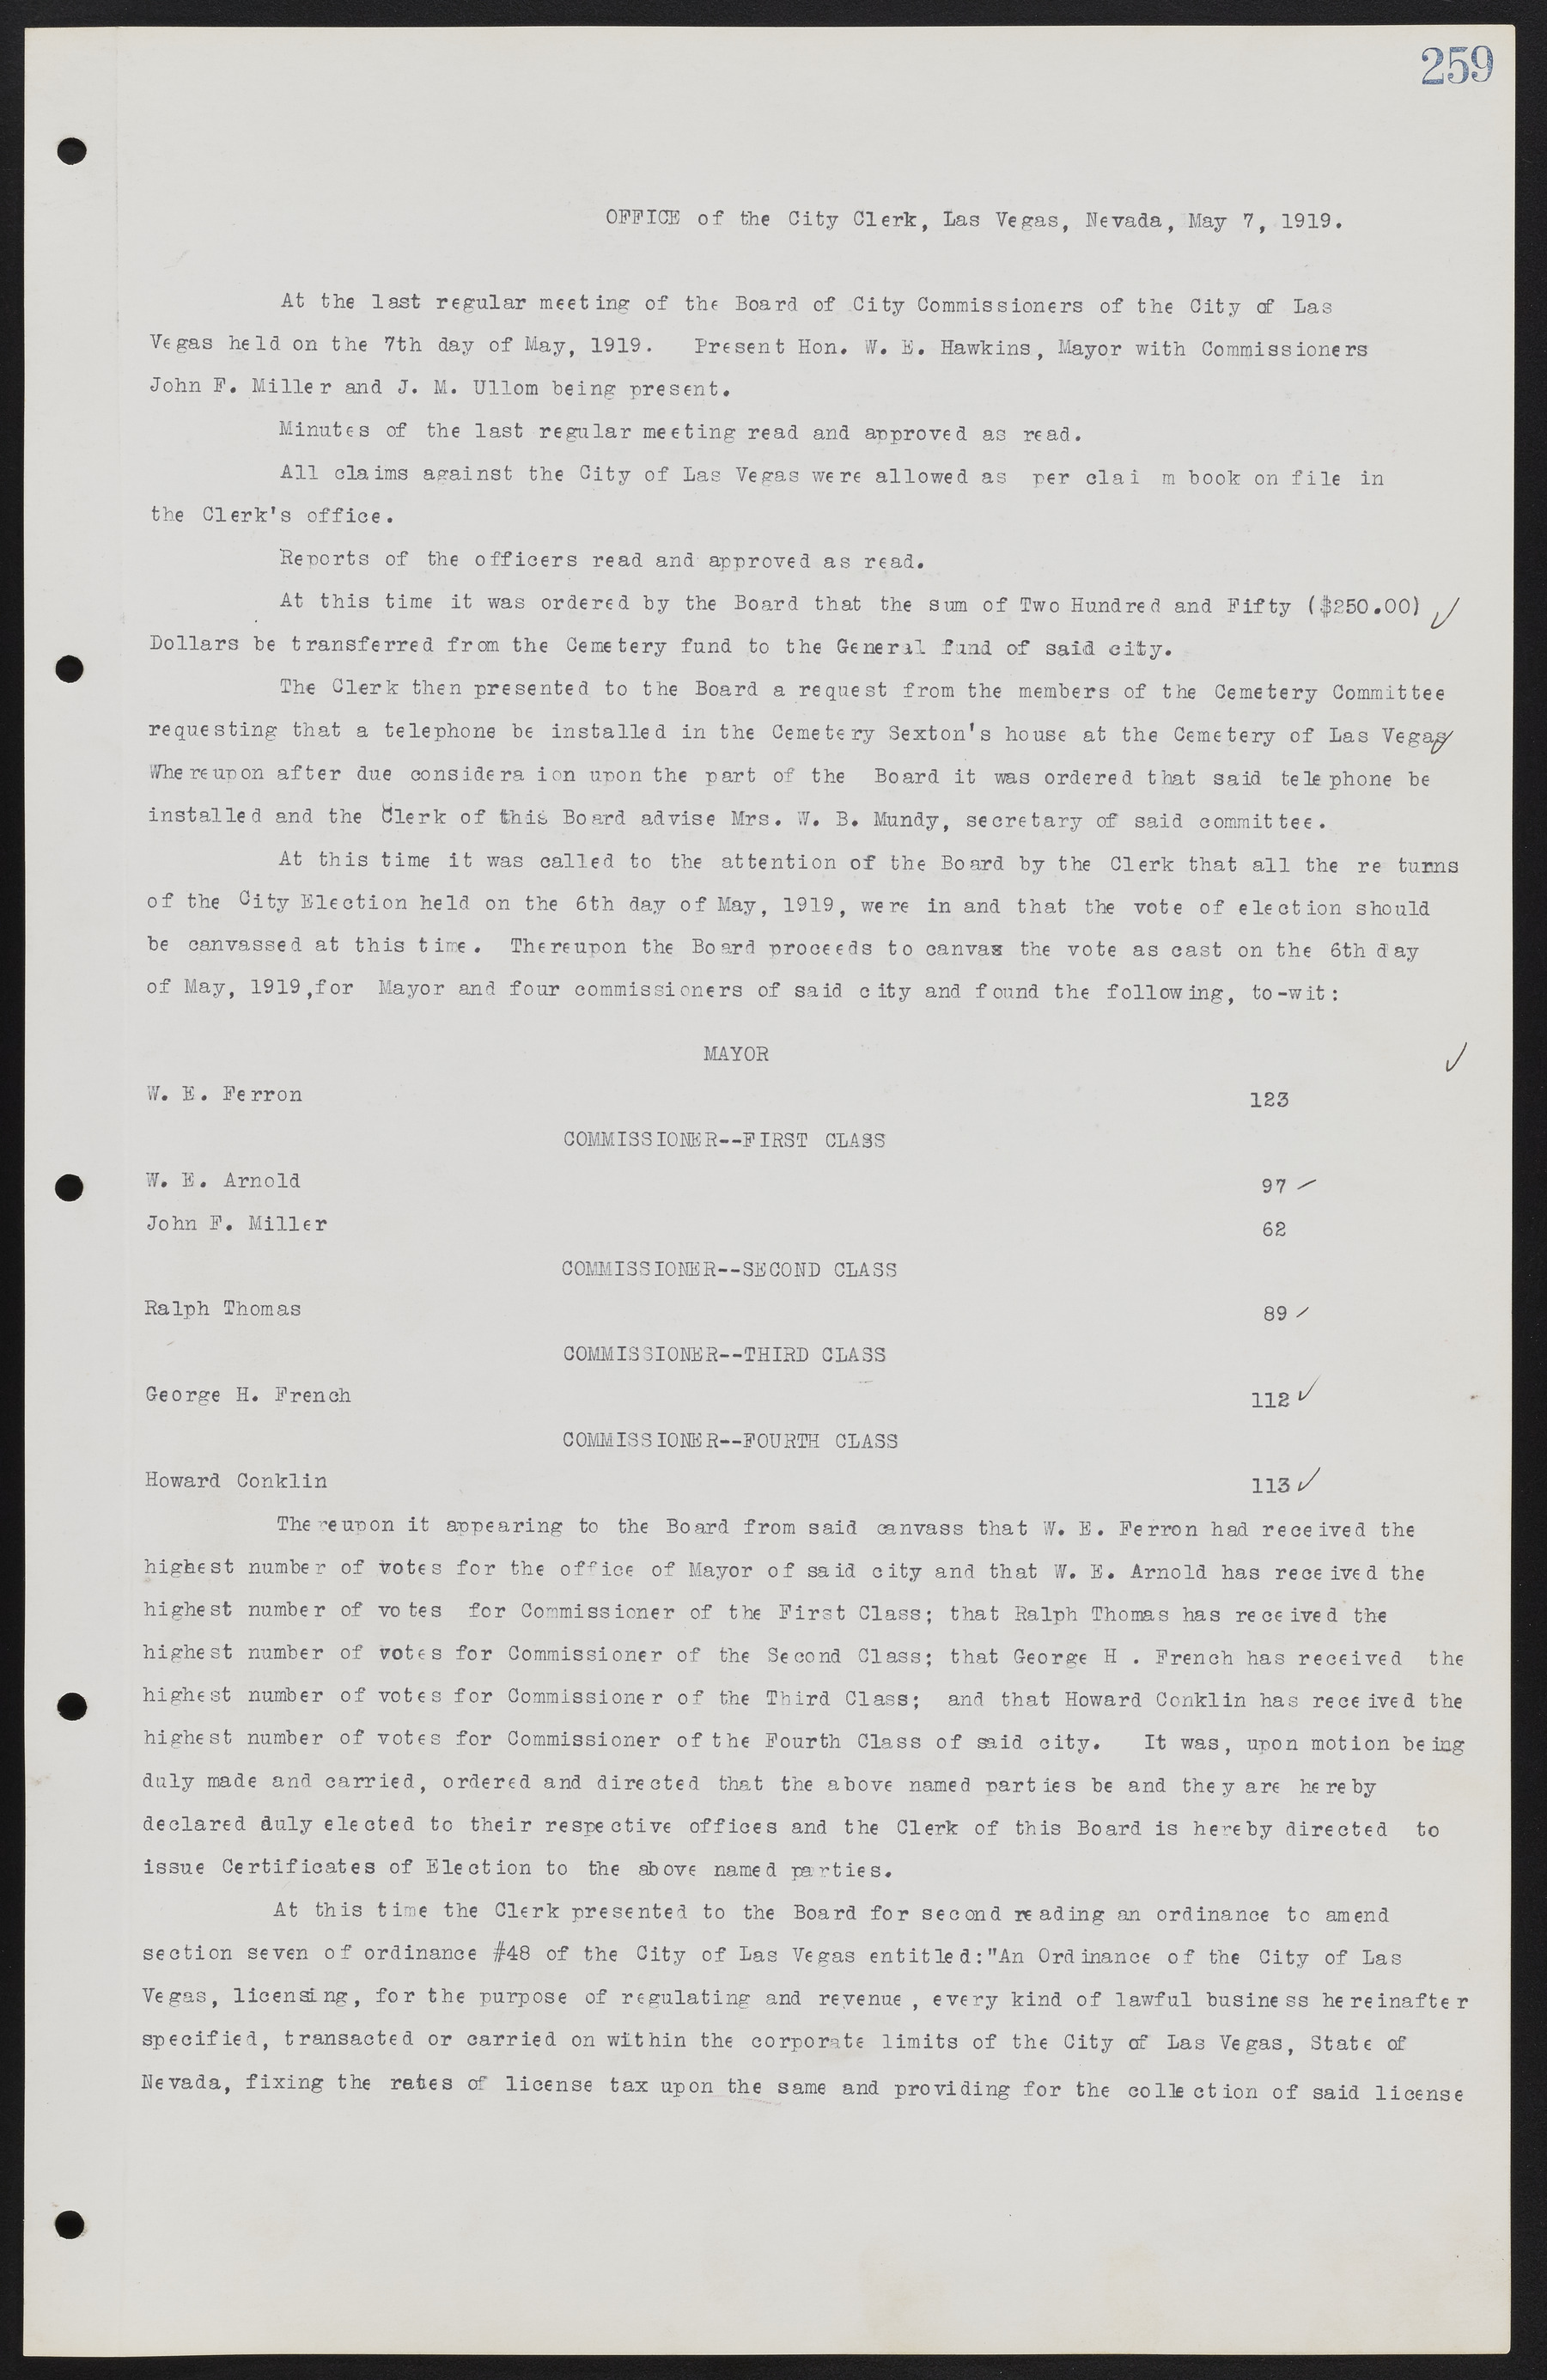 Las Vegas City Commission Minutes, June 22, 1911 to February 7, 1922, lvc000001-275